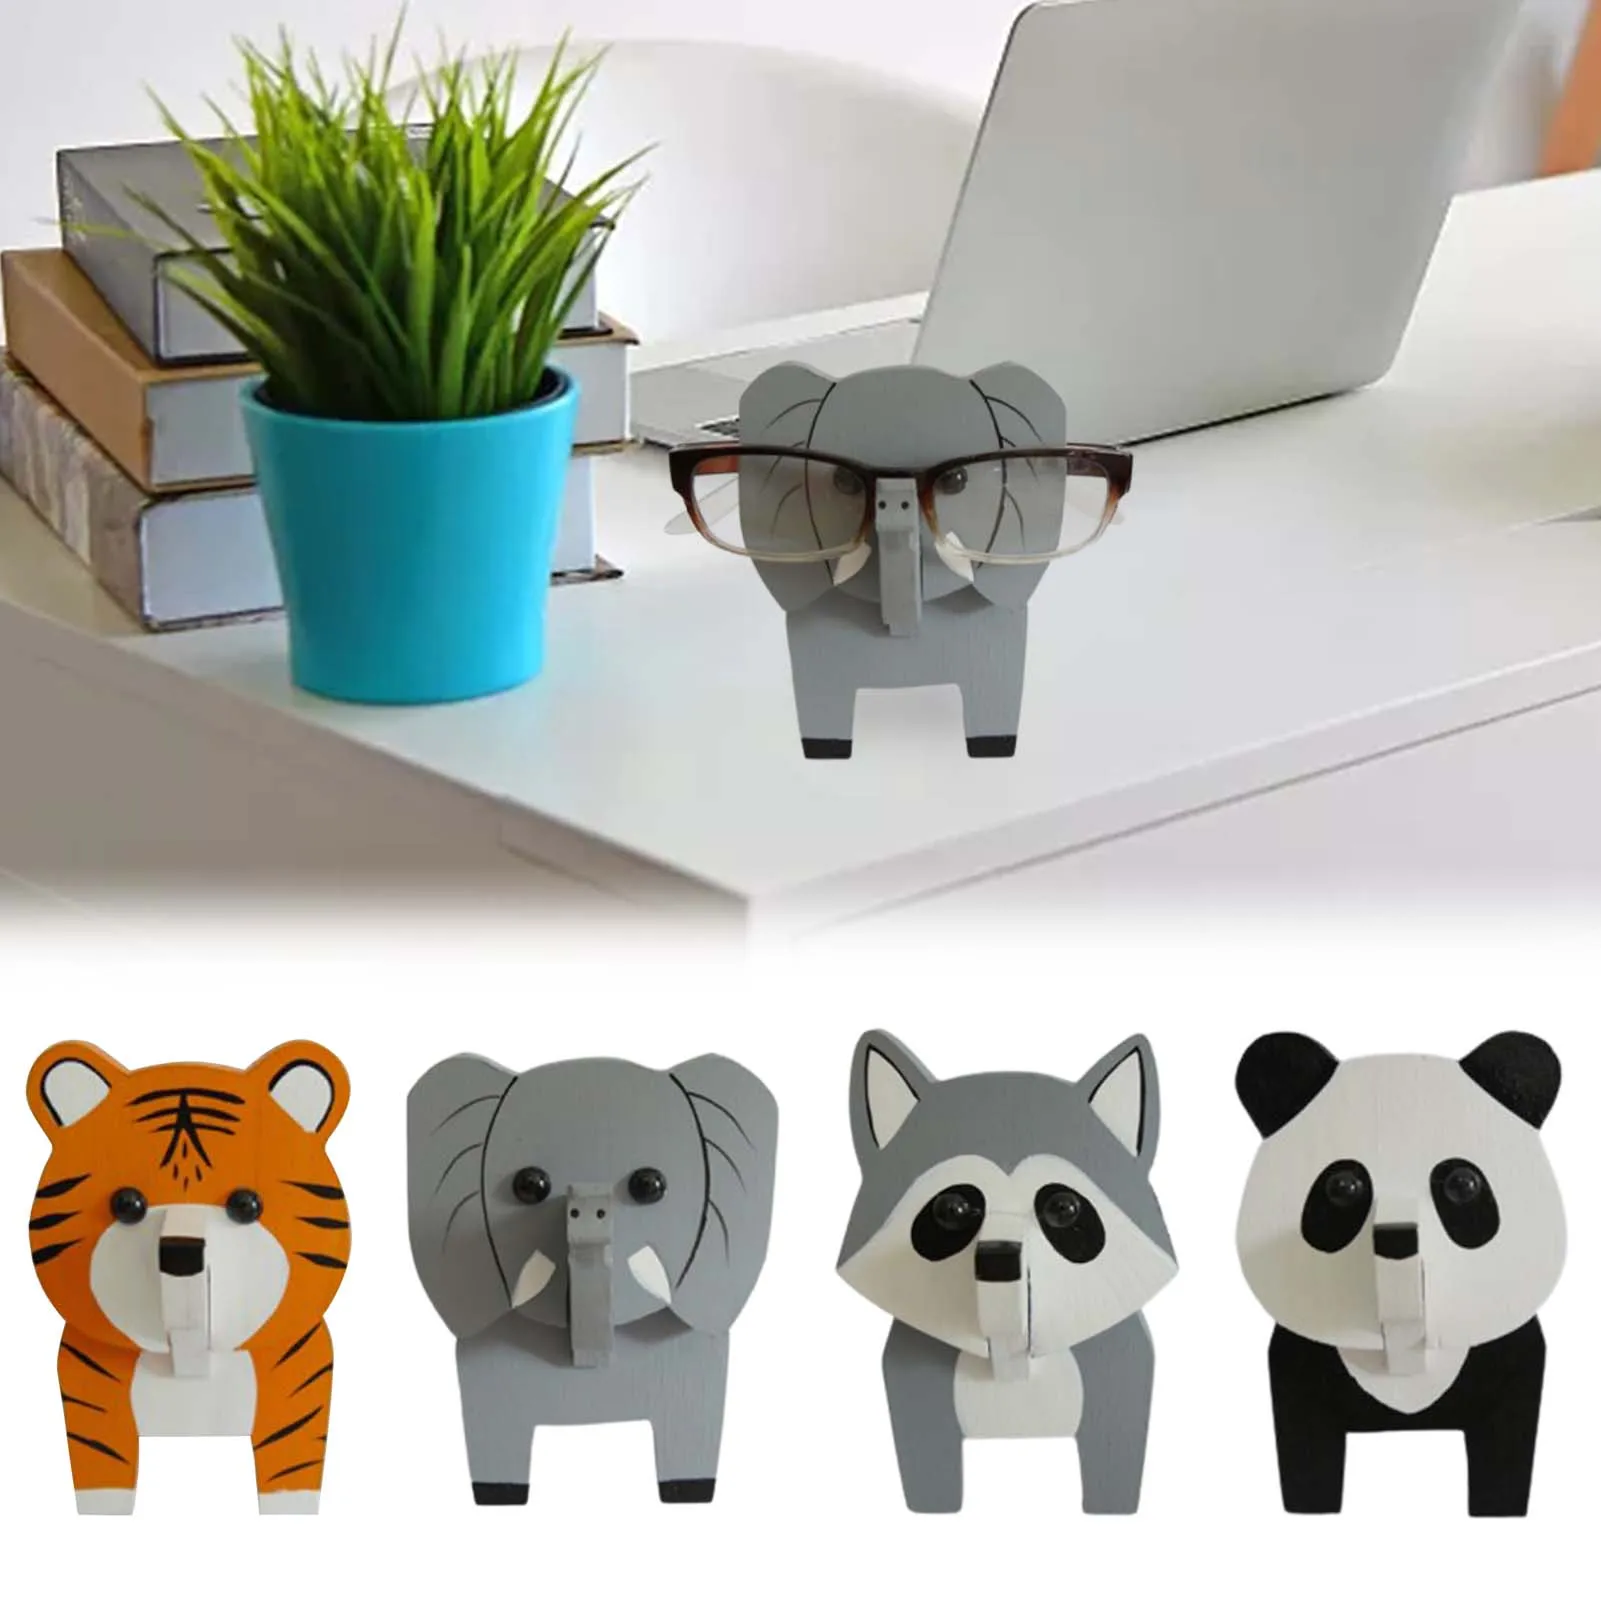 Wooden Animal Glasses Holder Cartoon Detachable Spectacle Frame Eyeglasses Holder for Home Office (Elephant/ Tiger/ Panda)